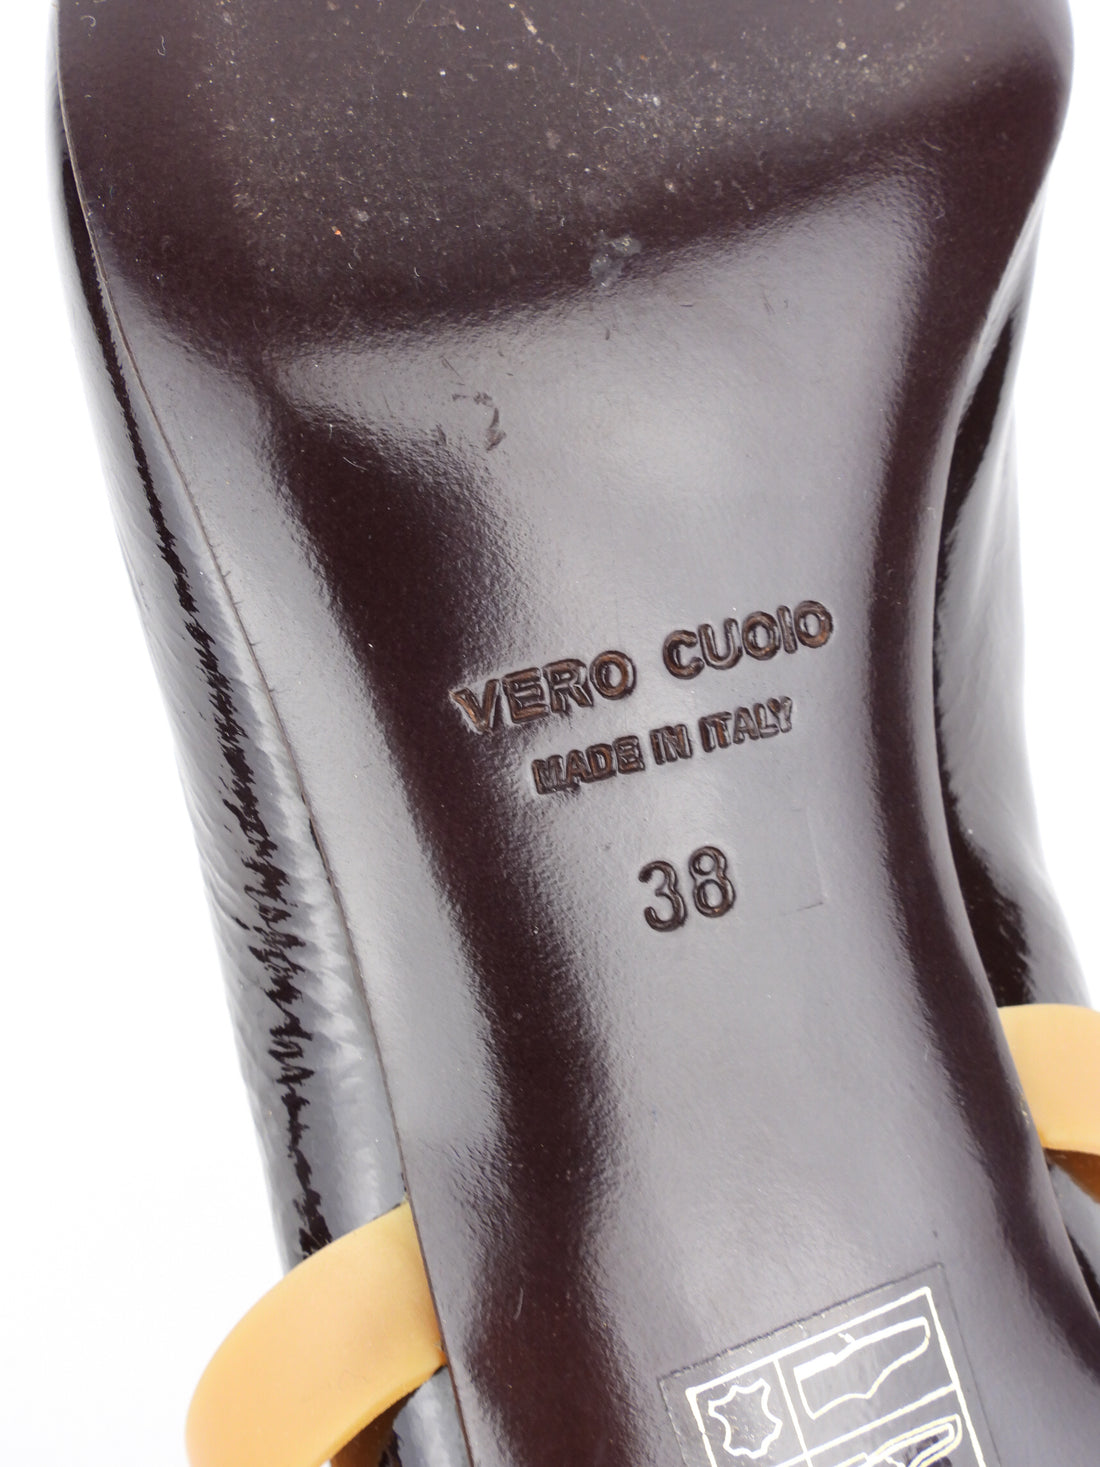 Helmut Lang Brown Patent Leather Rubber Band Kitten Heel - 38 EU